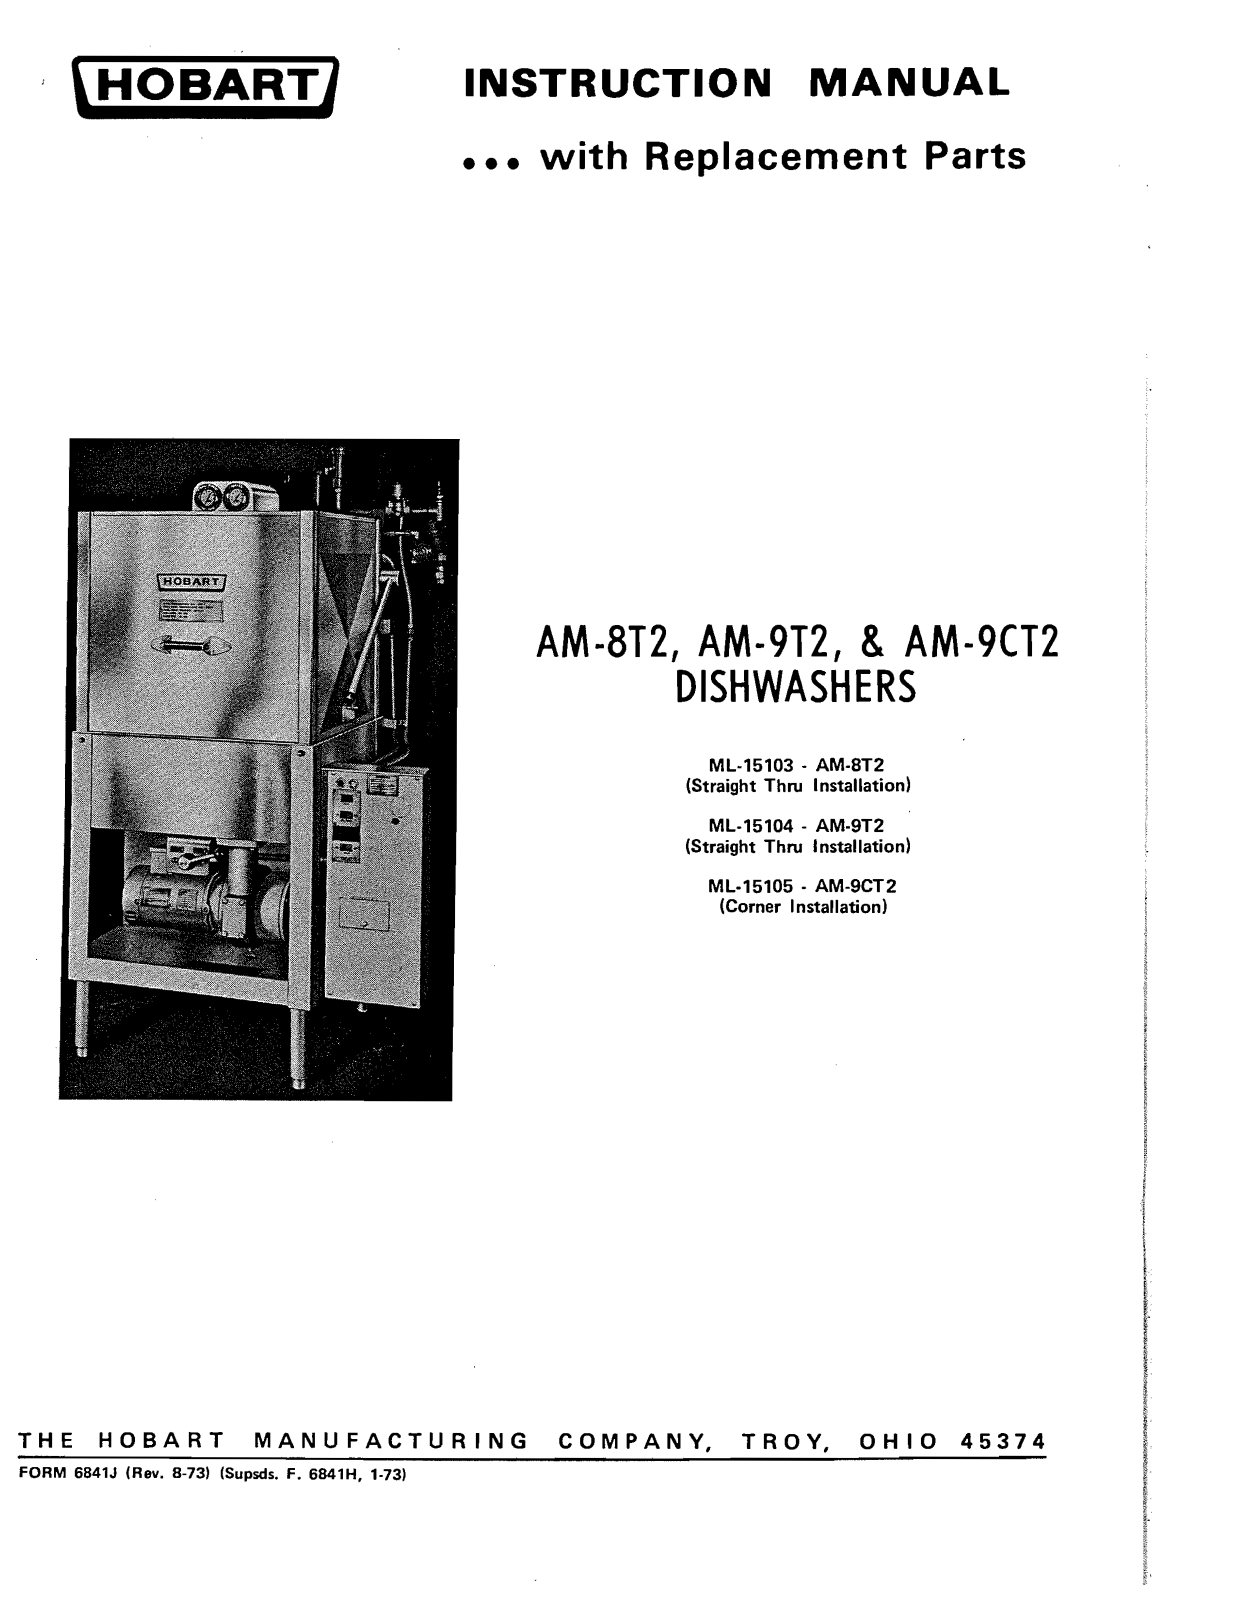 Hobart AM-8T2 Installation Manual